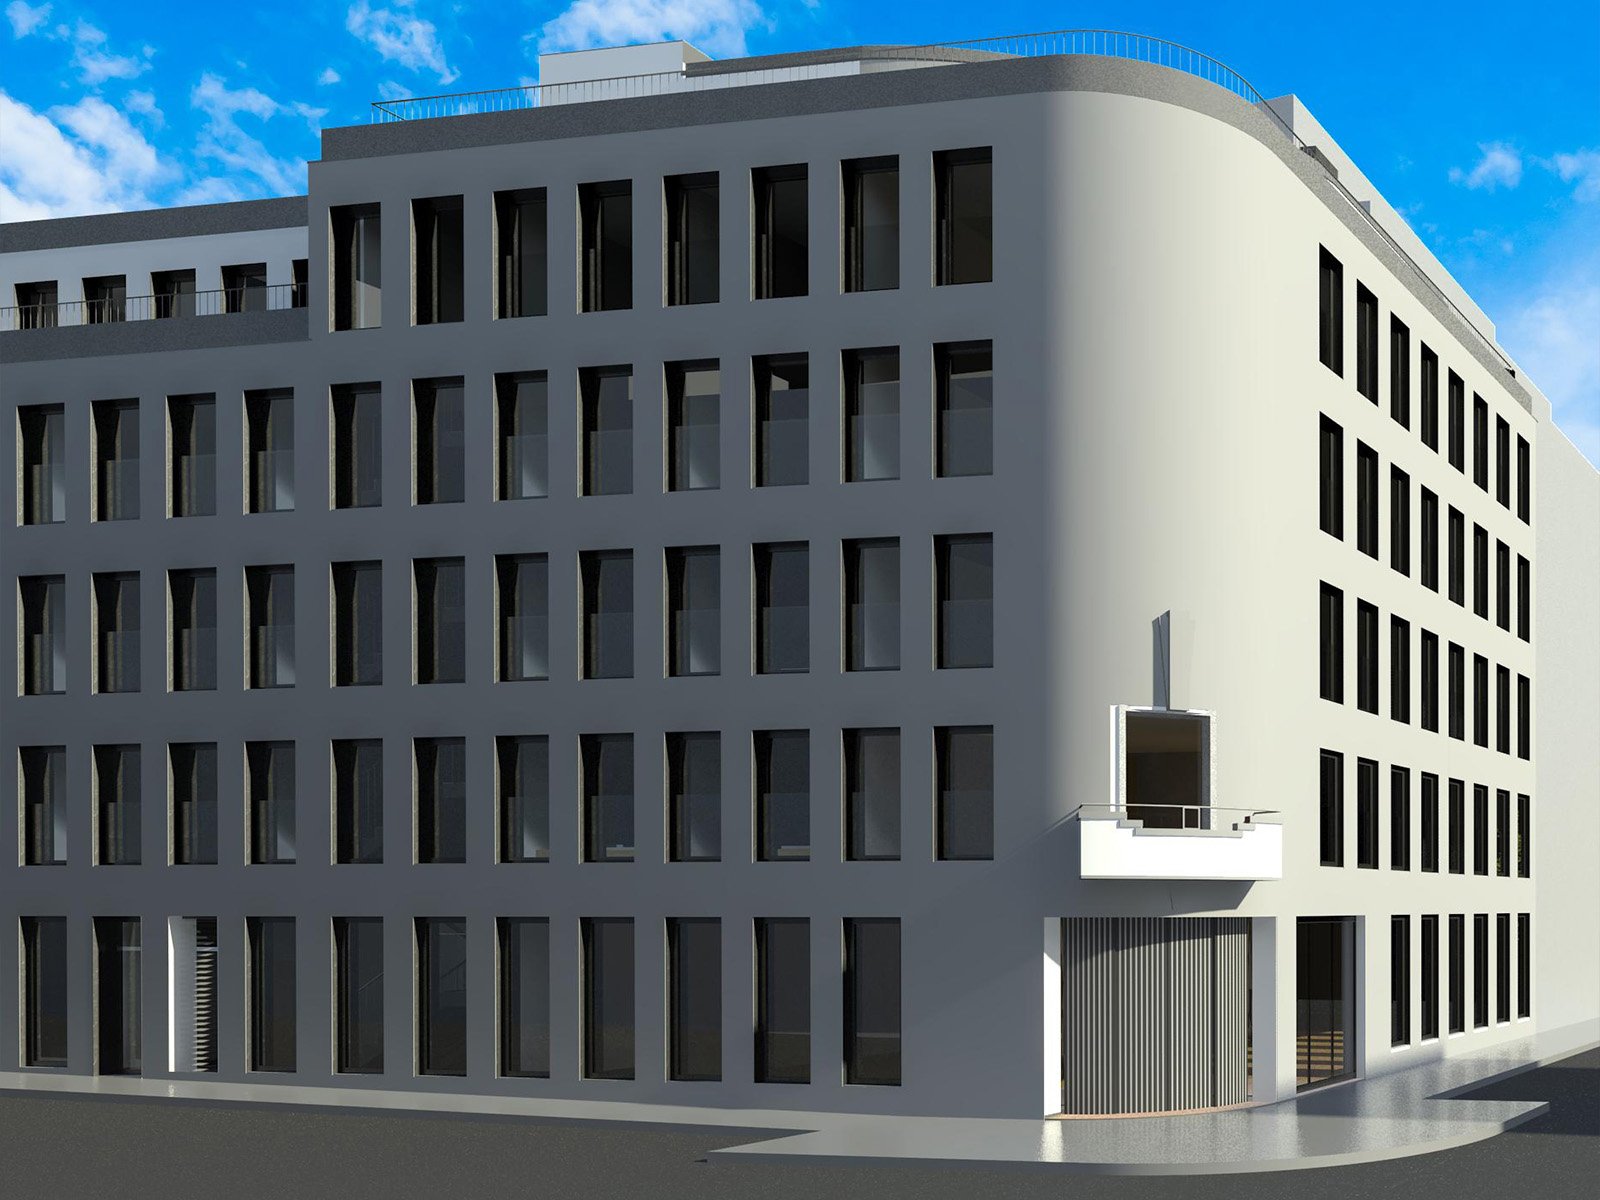 3 bedroom duplex apartment inserted in new development in Matosinhos 2257920181